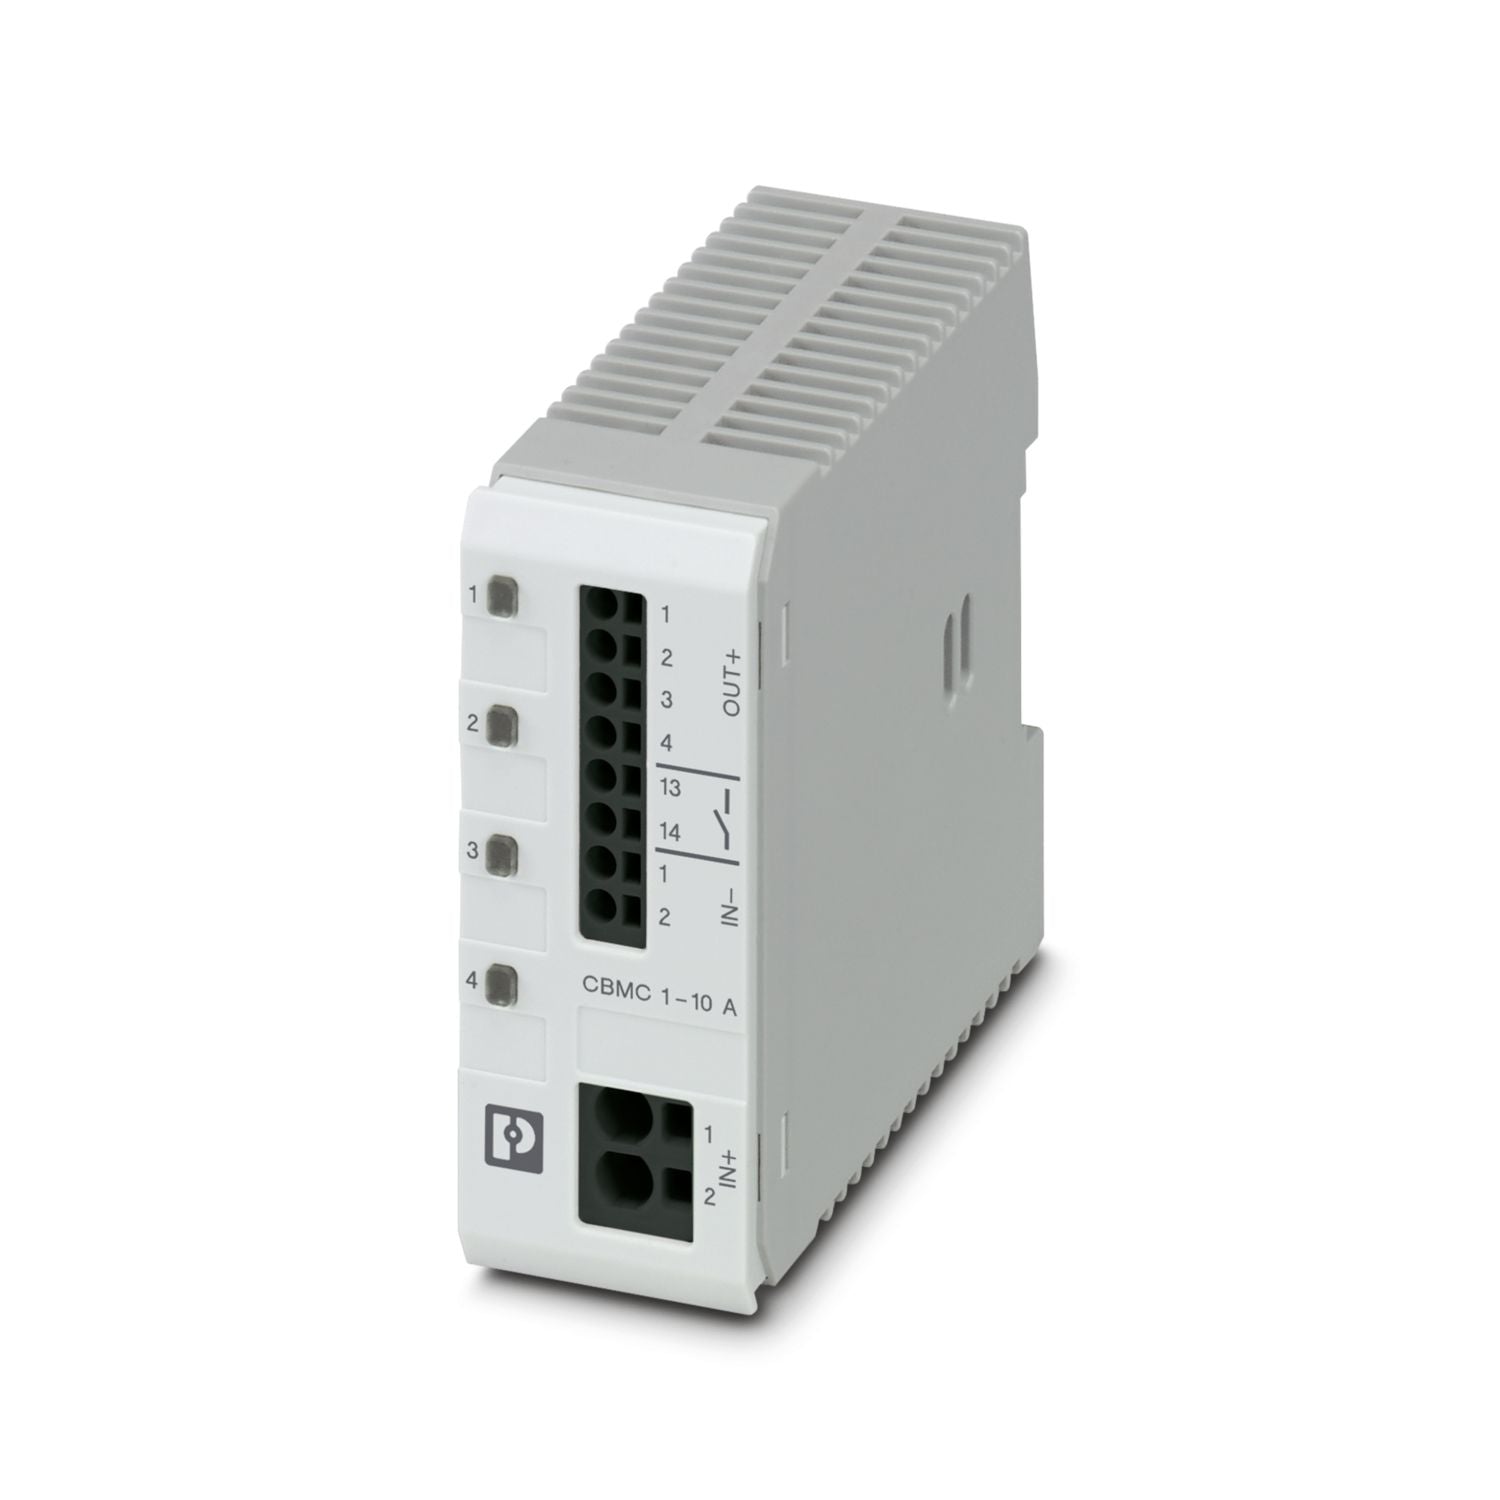 2906032 | Phoenix Contact | Circuit Breaker Electronic Programmable 4 Channel 1-10A NO 24VDC CBMC Series